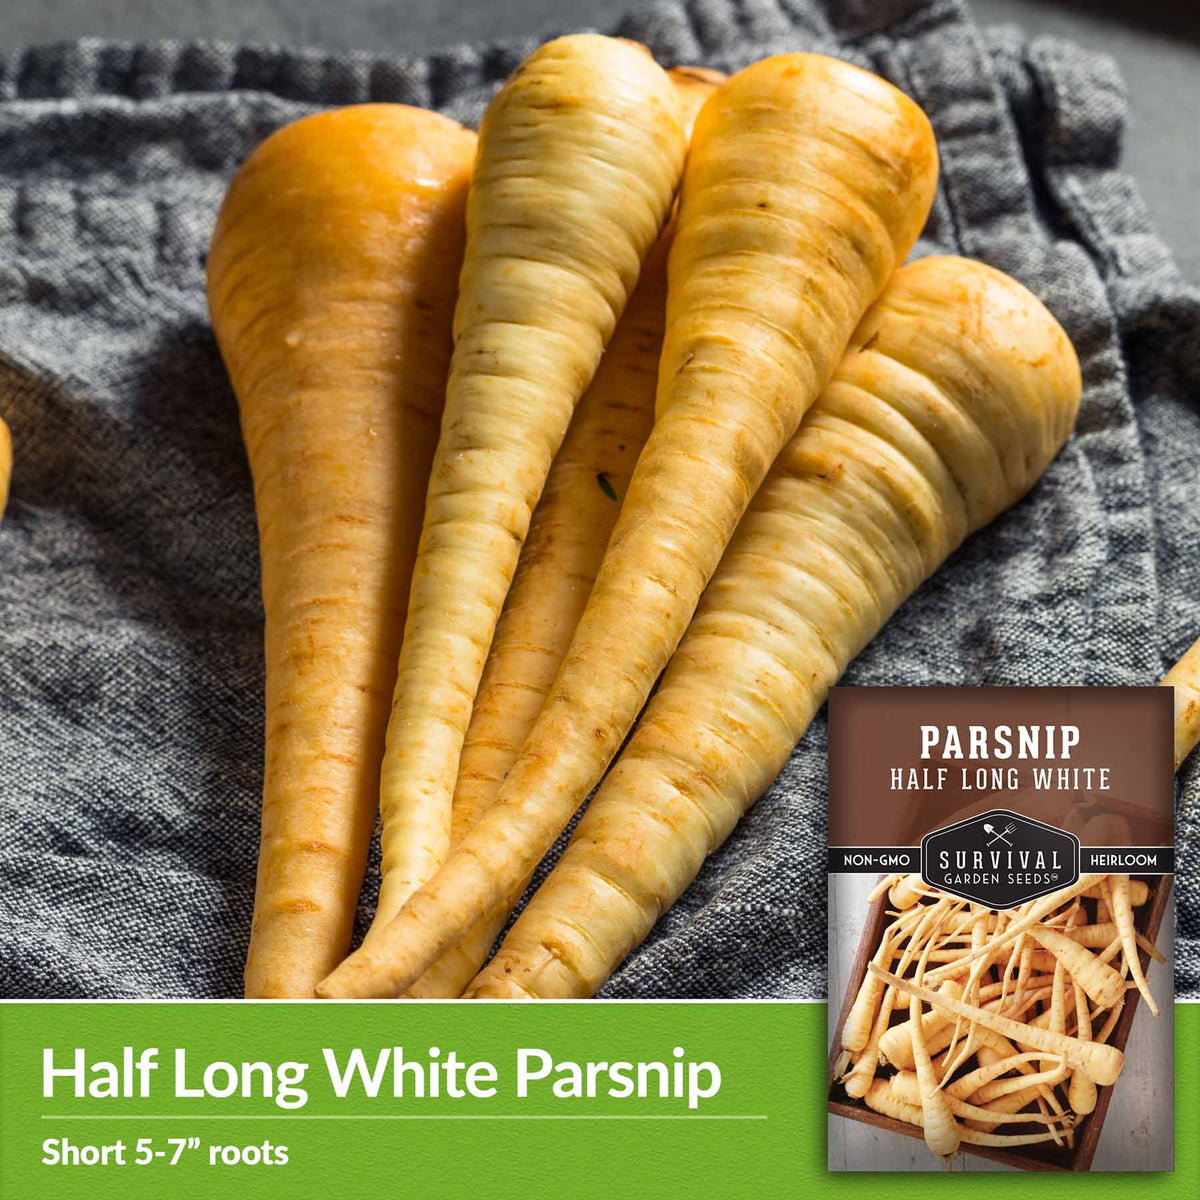 Half long white parsnips